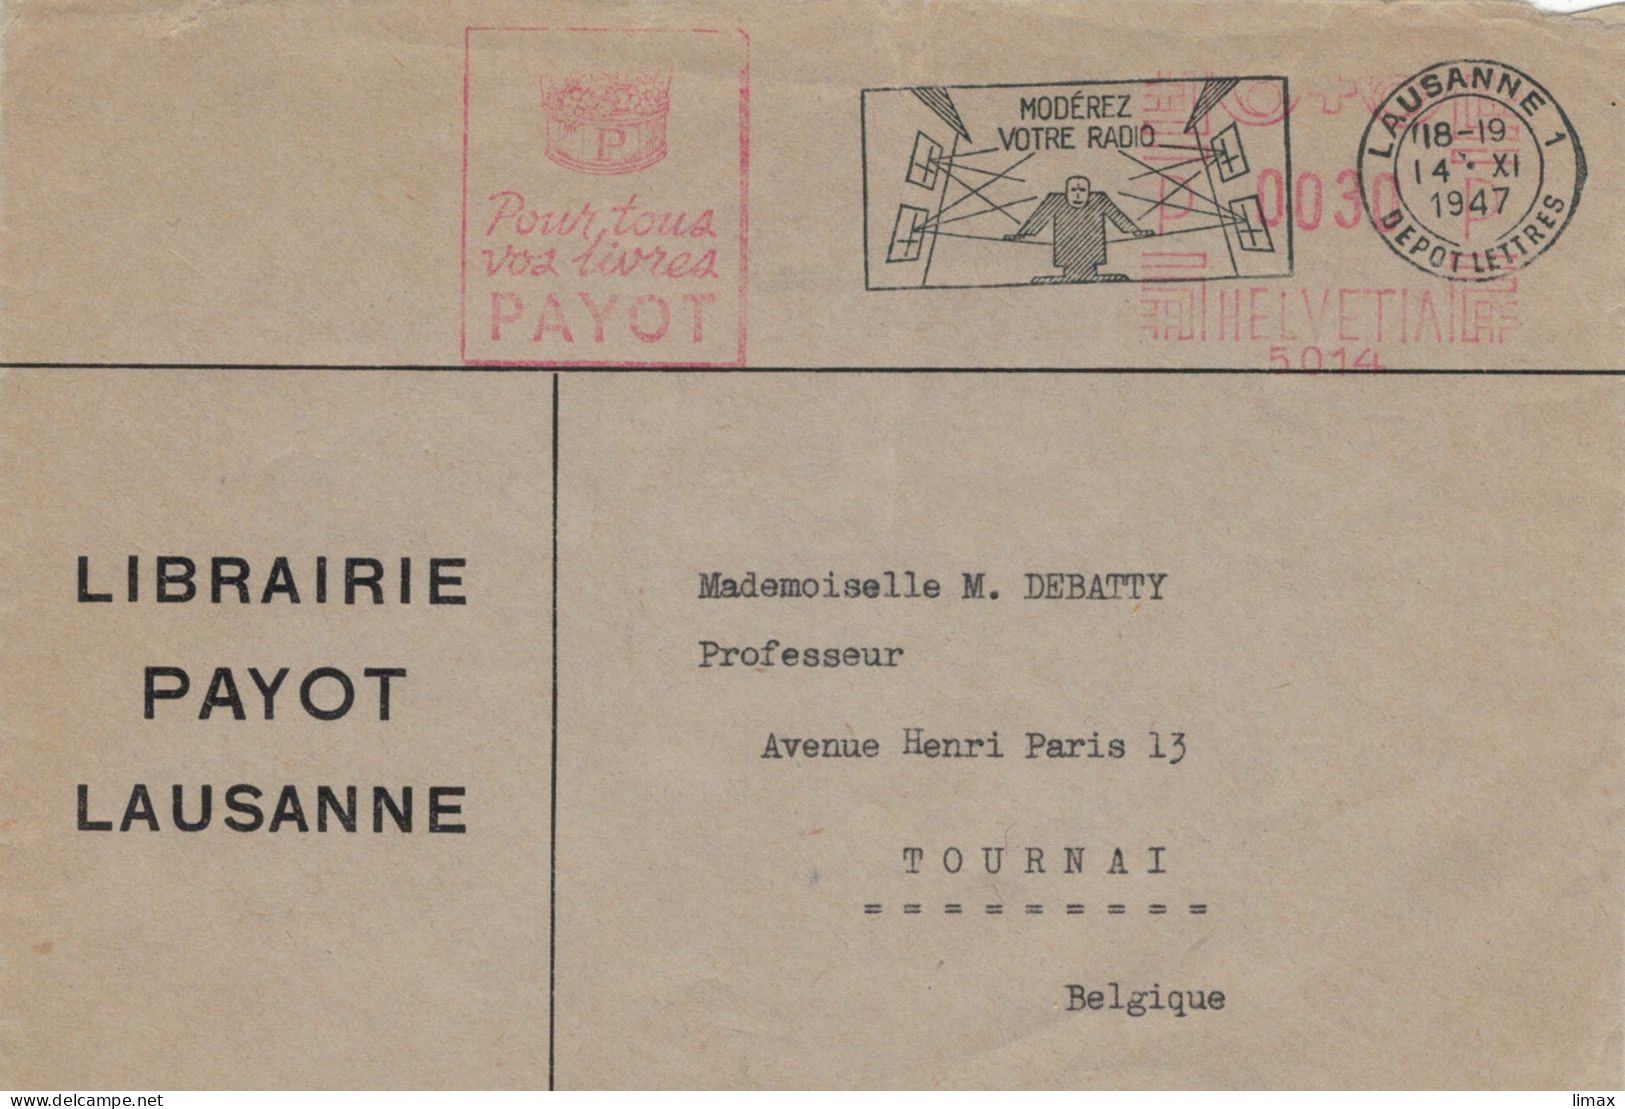 Librairie Payot Lausanne 1947 Stempel Nr. 5014 Moderez Votre Radio - Lautstärke > Prof. M. Debatty Tournai - Postage Meters